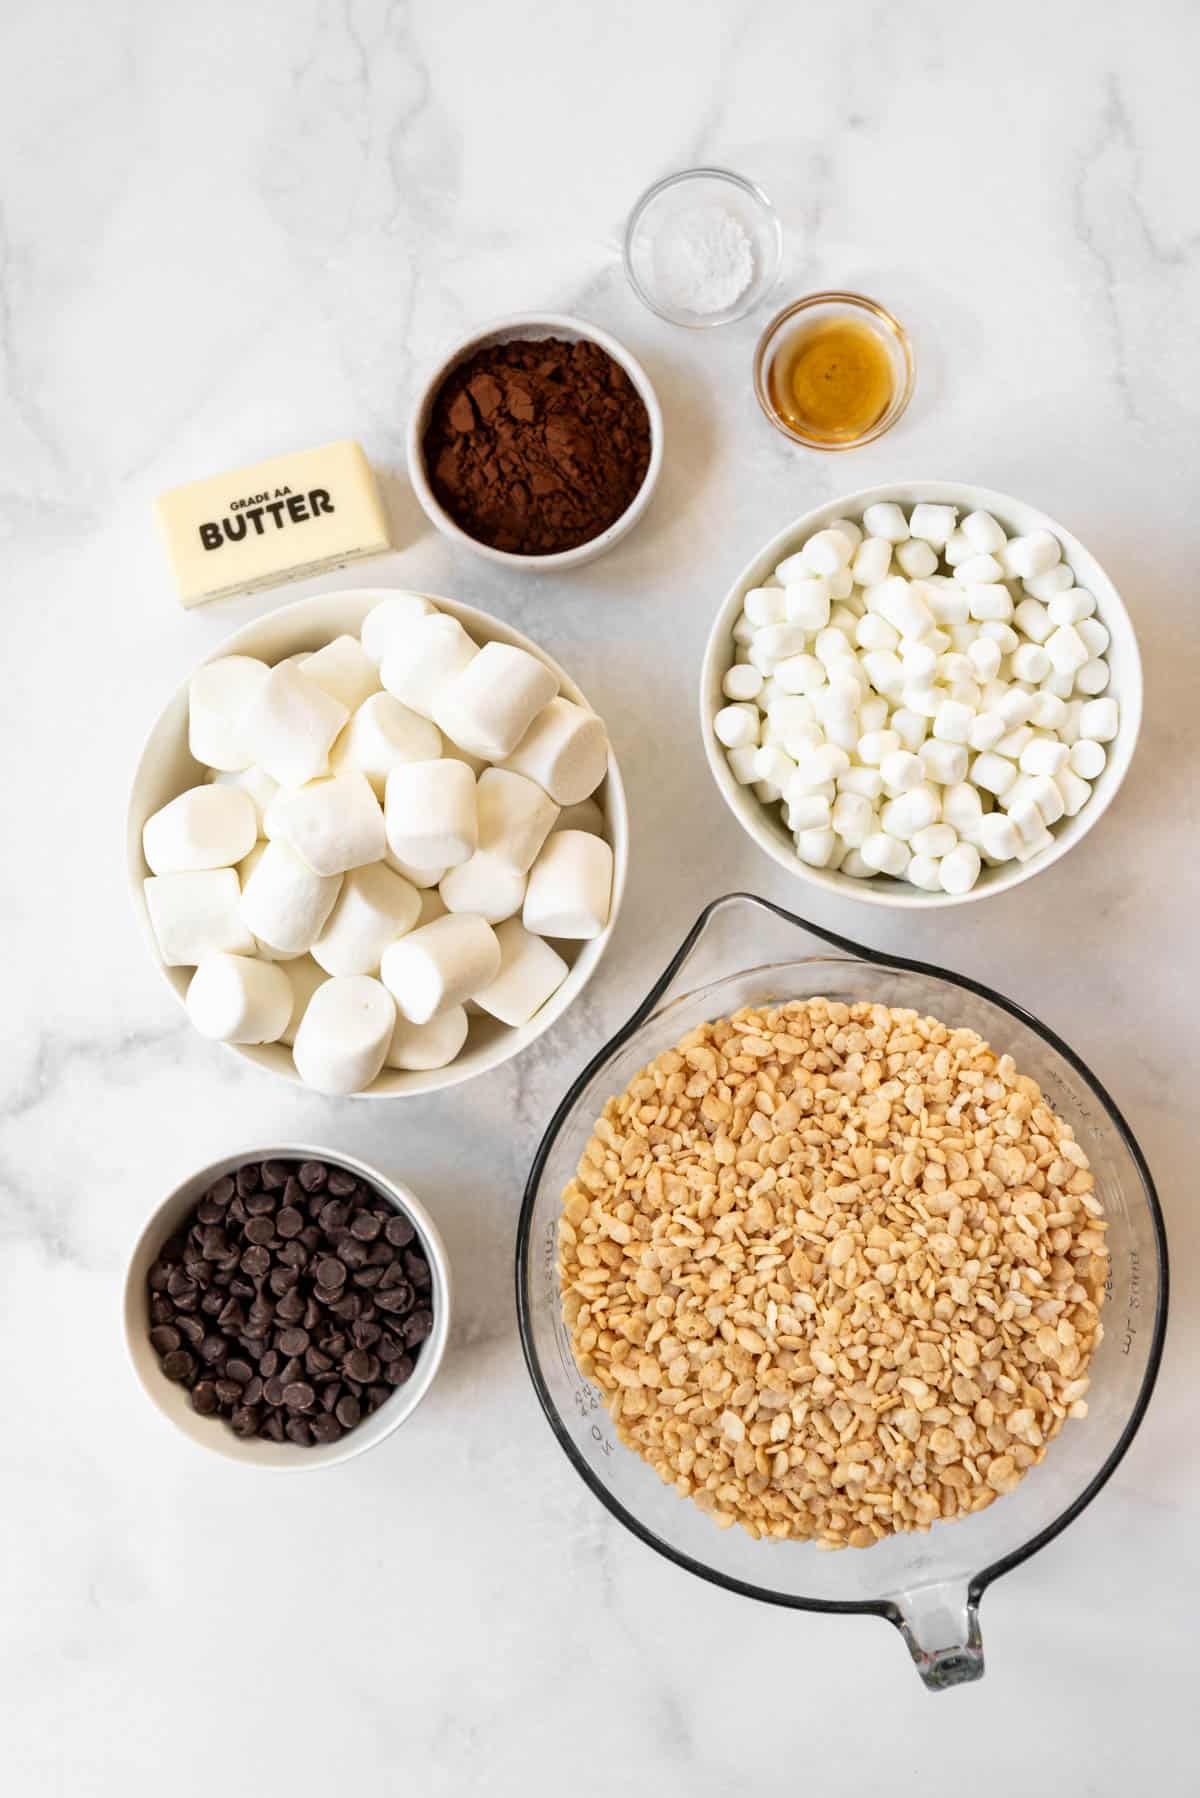 Ingredients for making chocolate rice krispies treats.